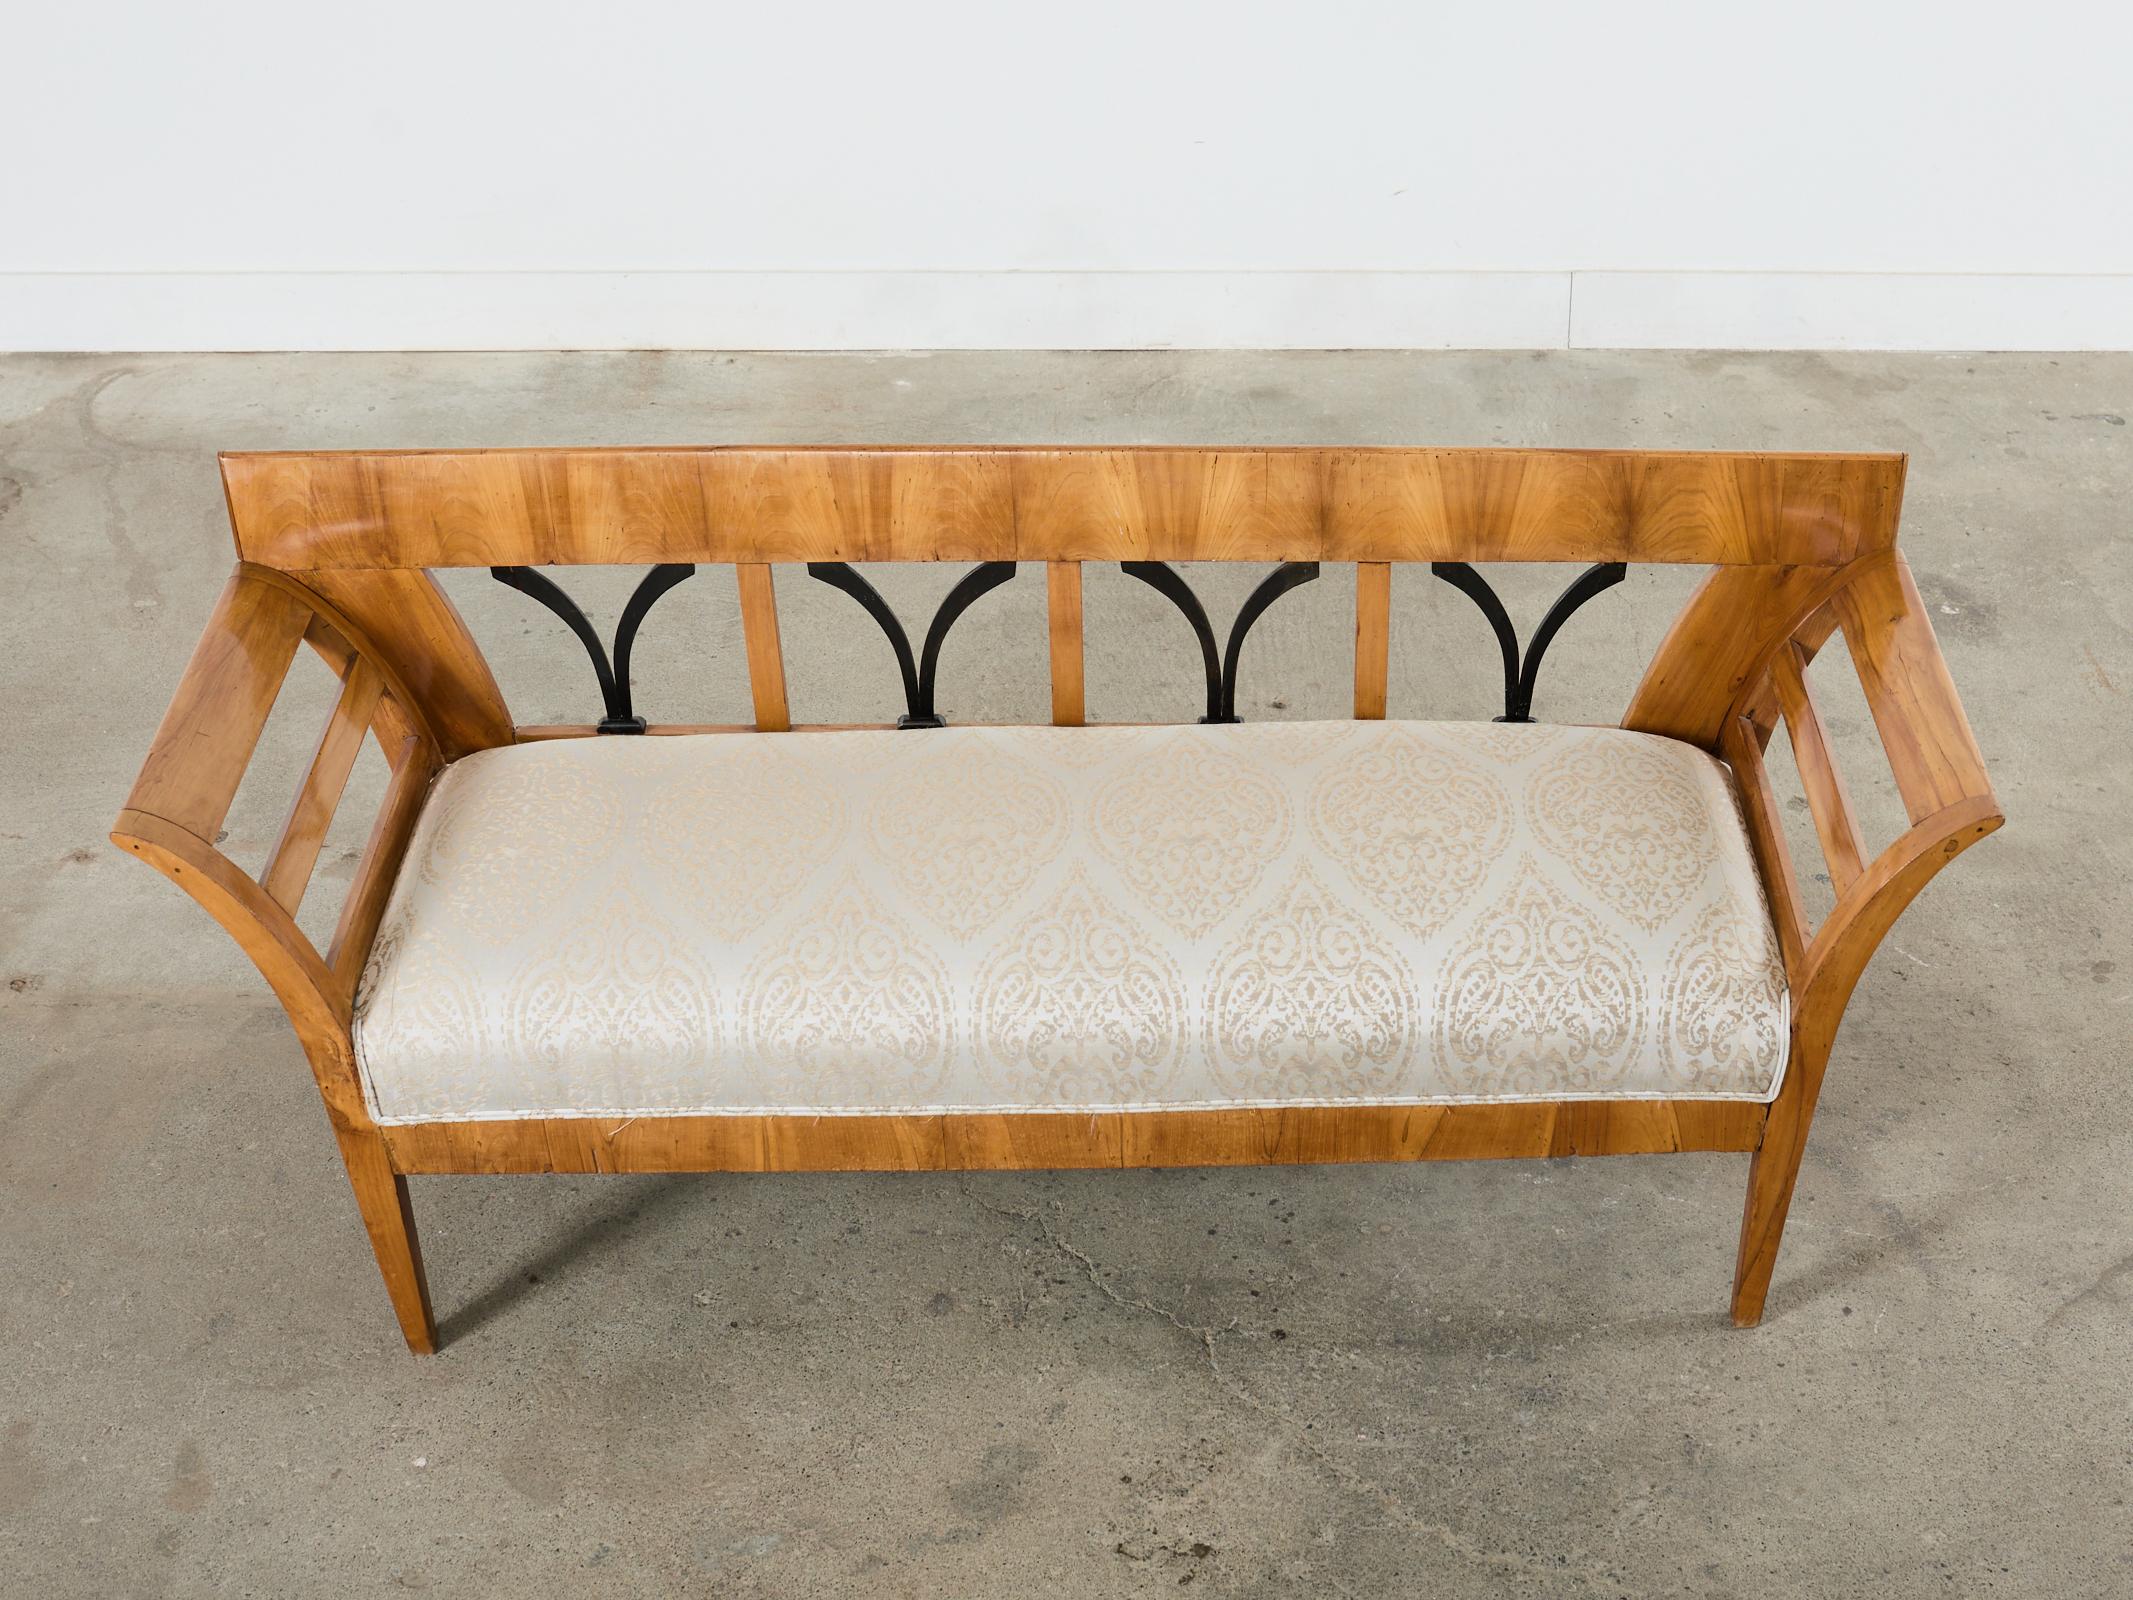 19th Century Swedish Neoclassical Style Birch Veneer Bench Seat In Distressed Condition For Sale In Rio Vista, CA